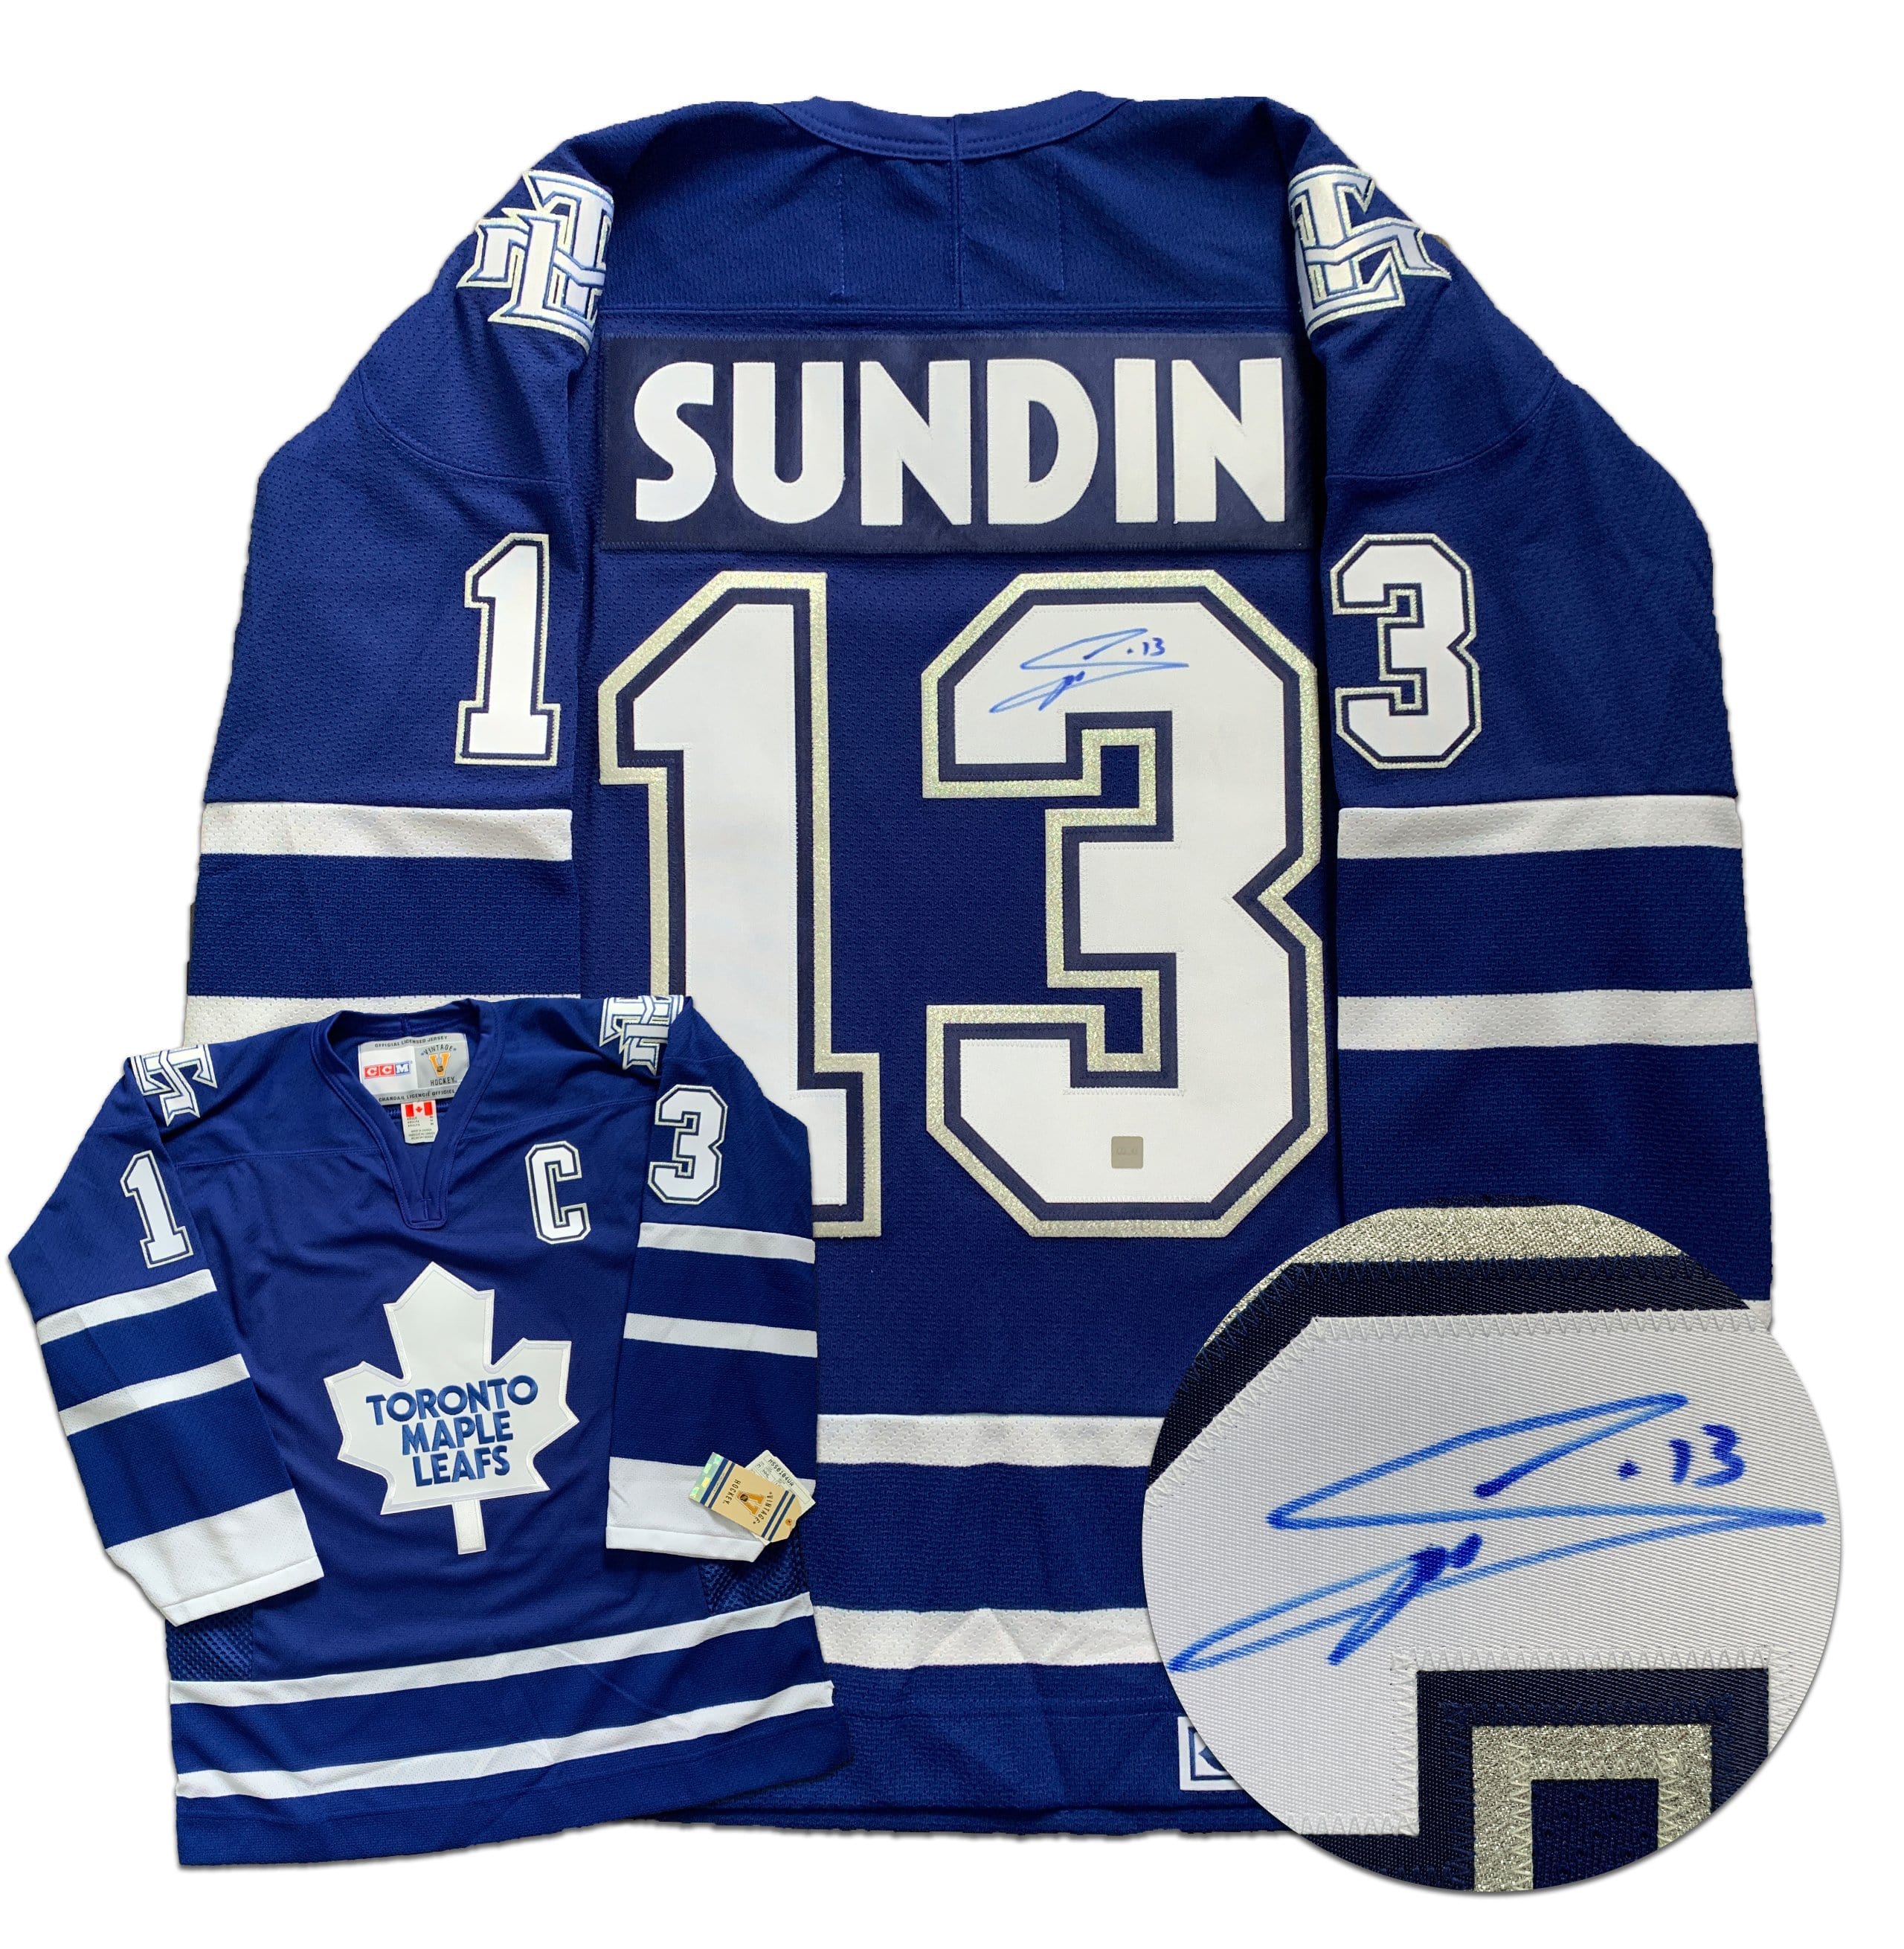 2007-08 Mats Sundin Maple Leafs Game Worn Jersey - Photo Match - Team  Letter